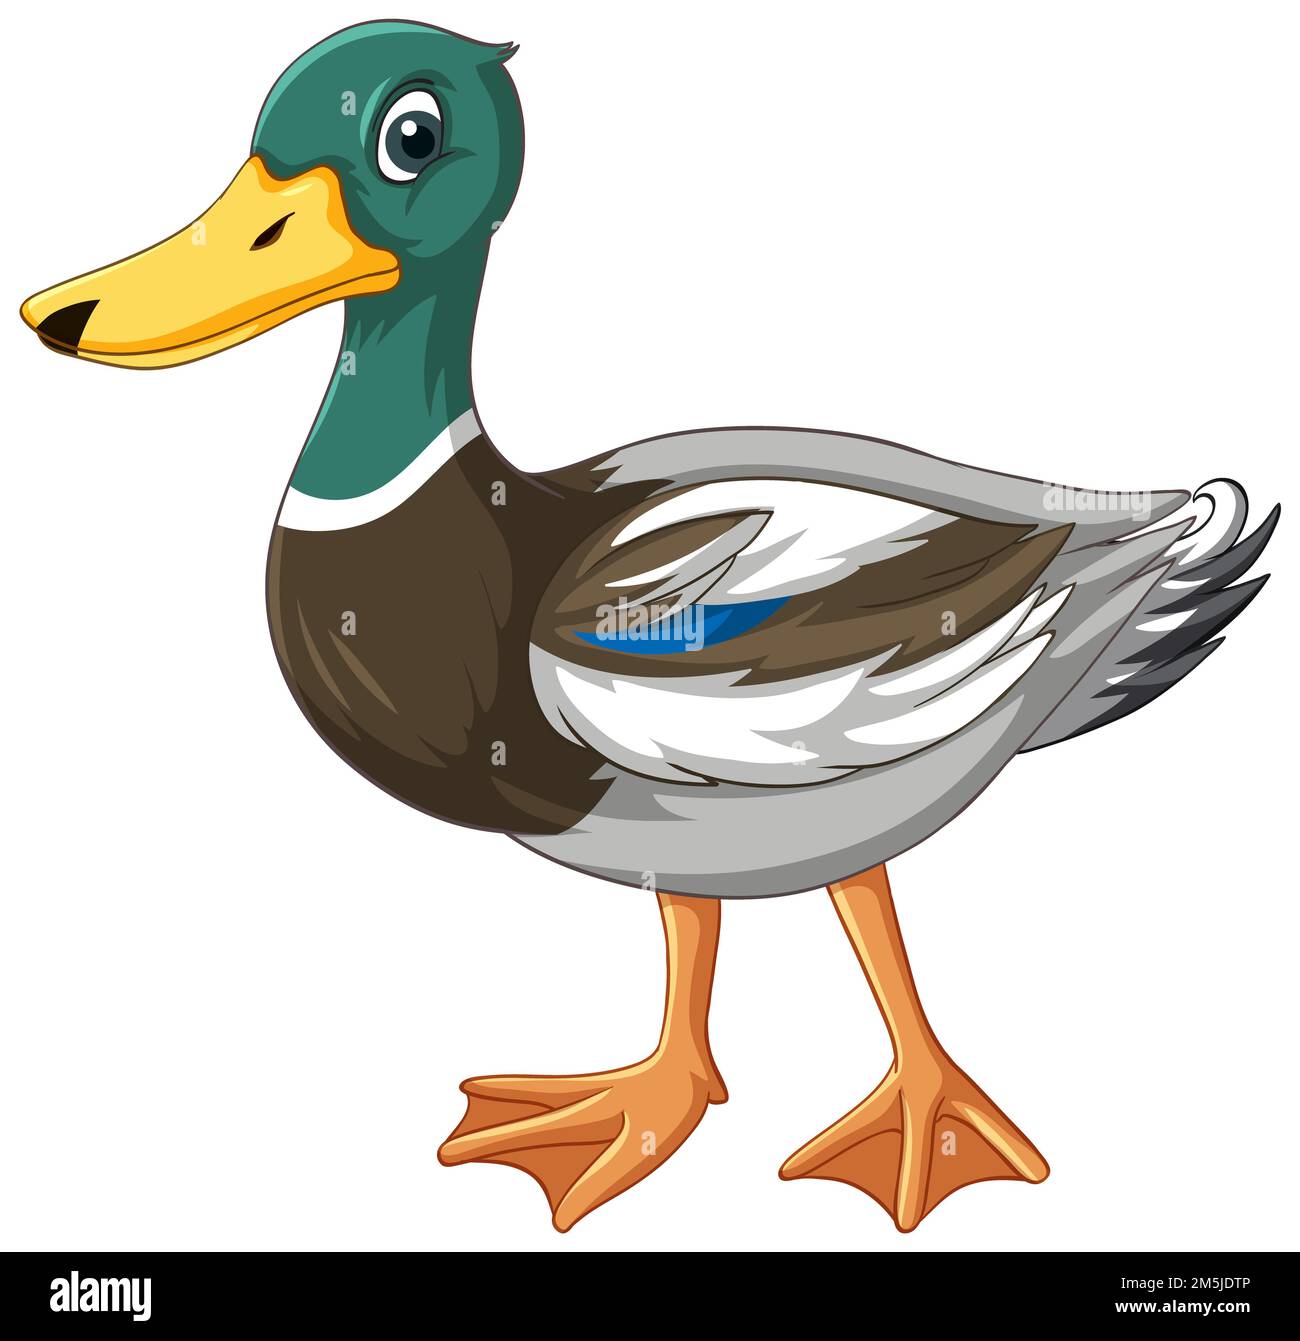 Duck with green head cartoon character illustration Stock Photo